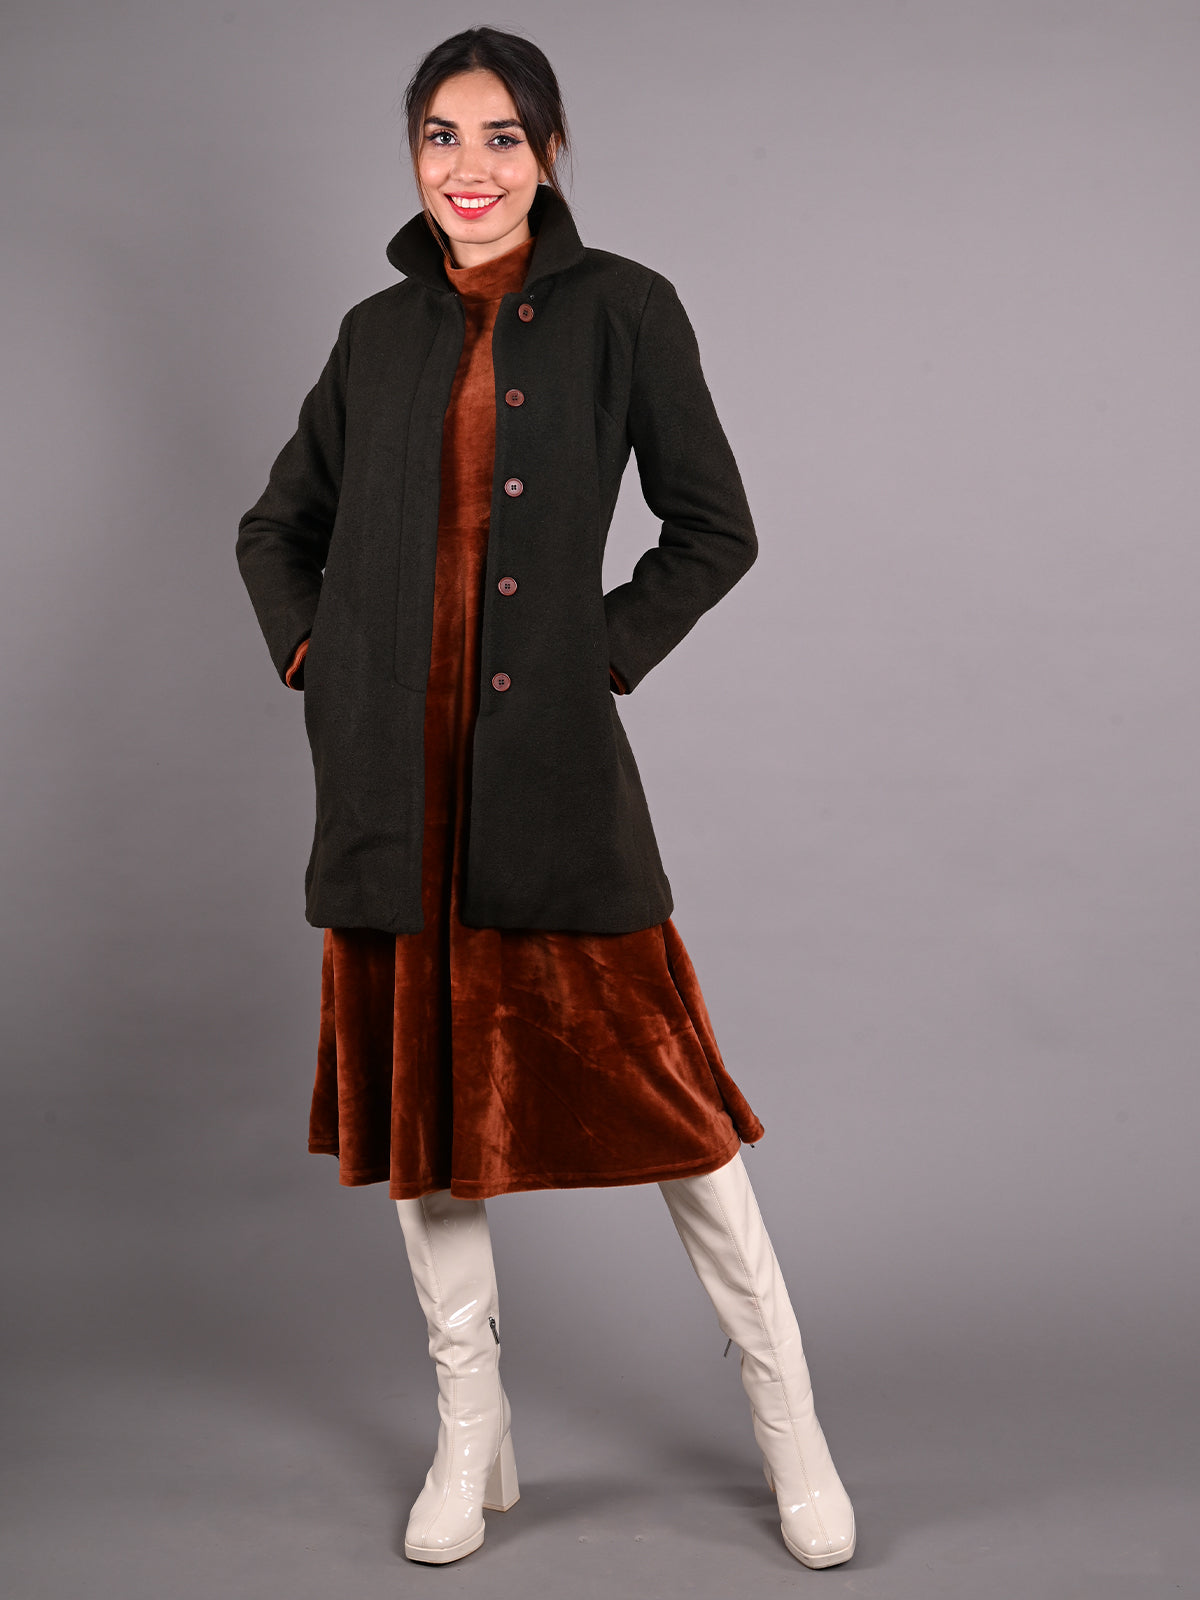 Winter Wool Long Coat Casual Embroidery Floral Jacket Wool & Blends Women  Overcoat Vintage Runway Elegant Double Breasted